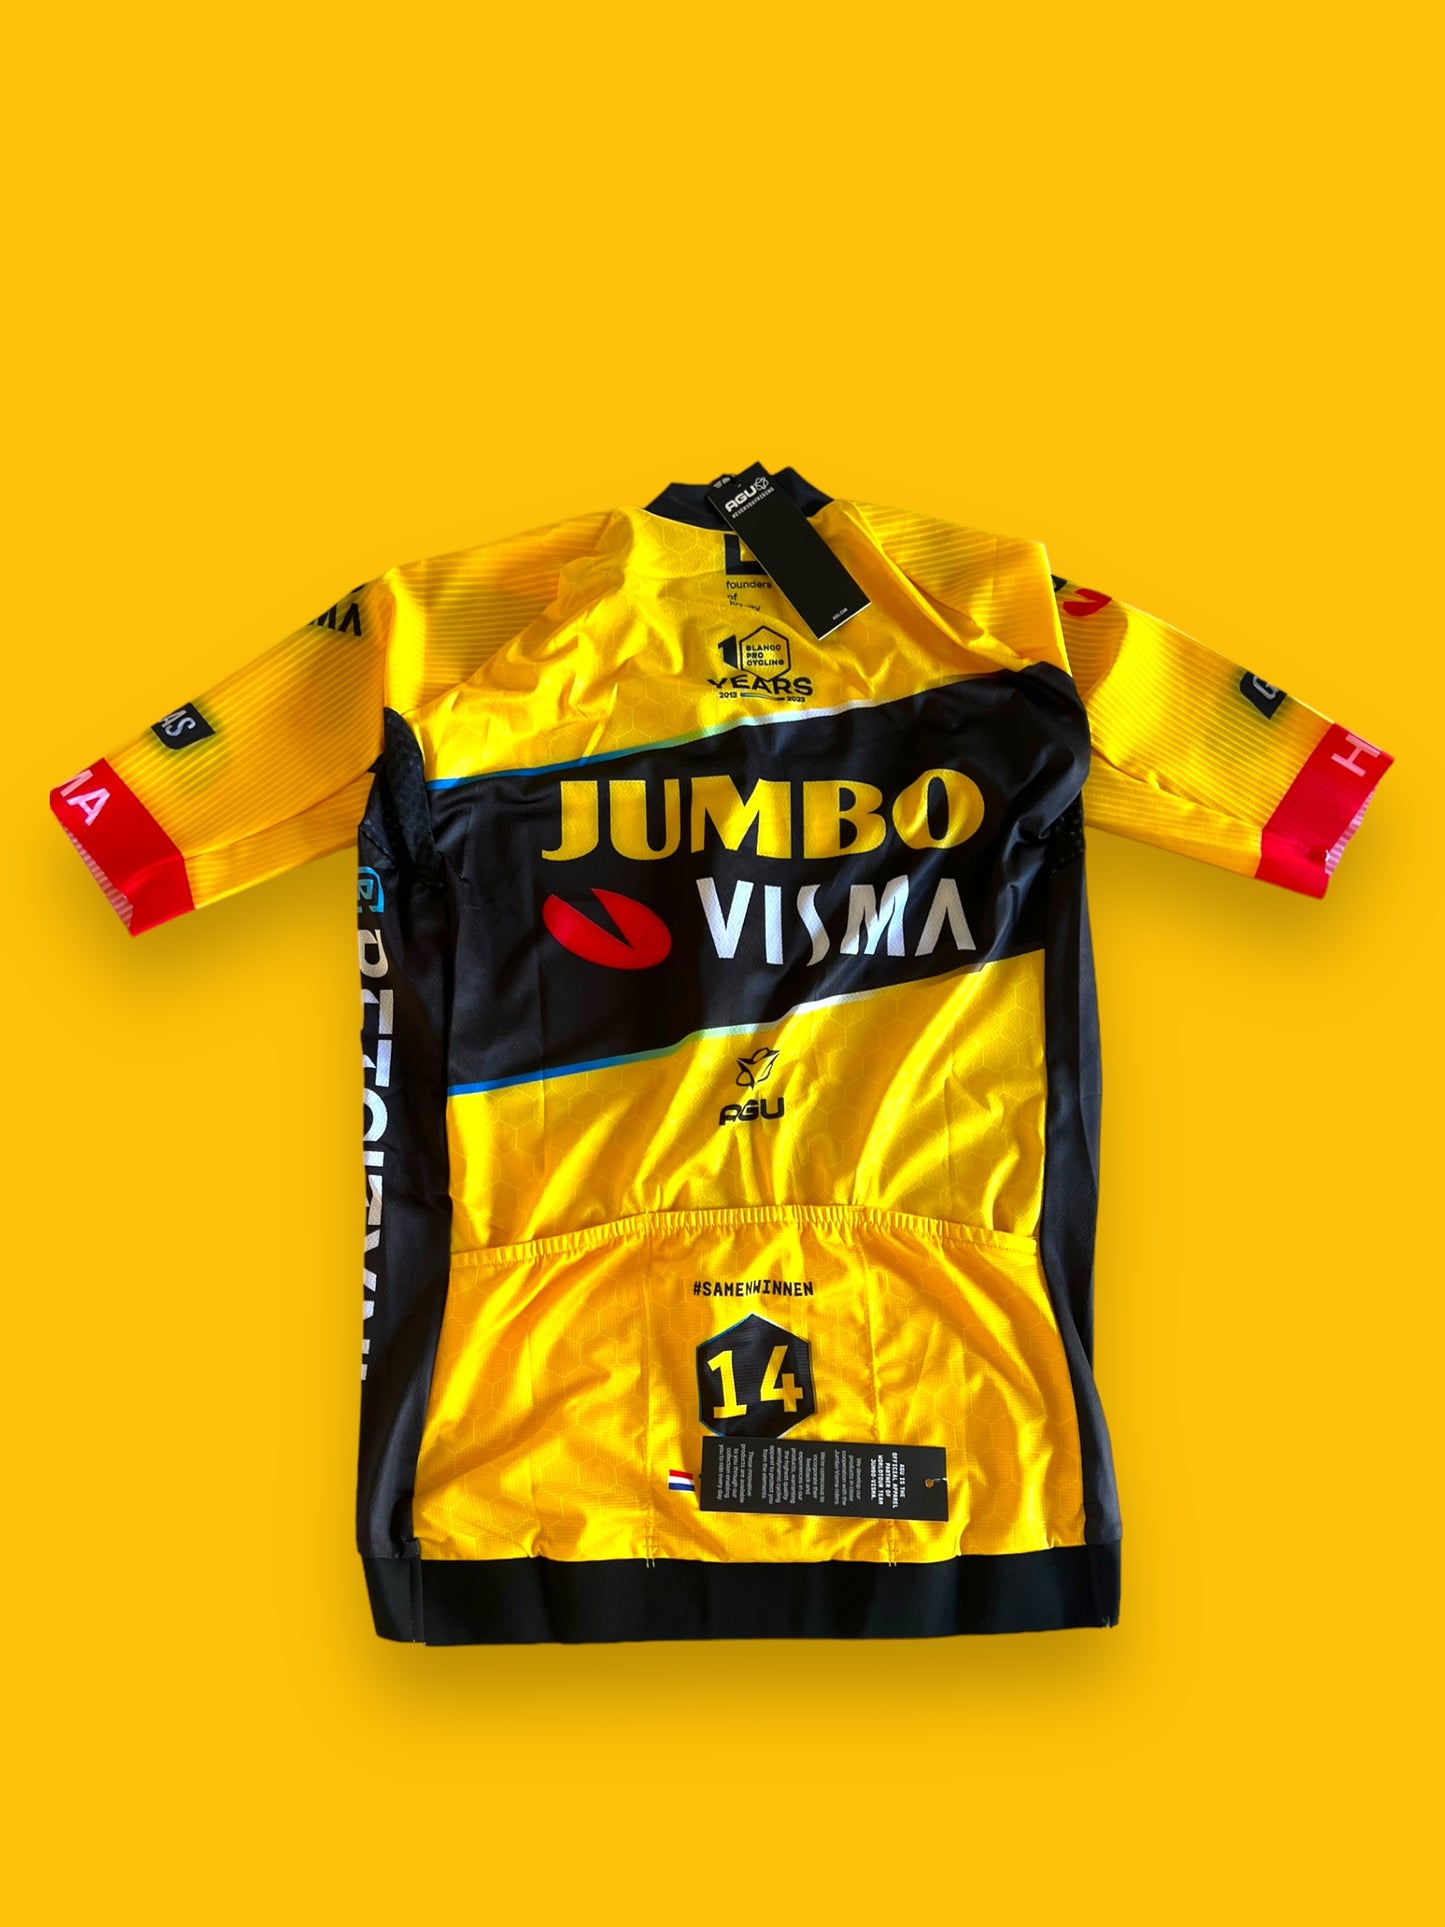 Aero Jersey Short Sleeve | Agu | Jumbo Visma | Pro Cycling Kit